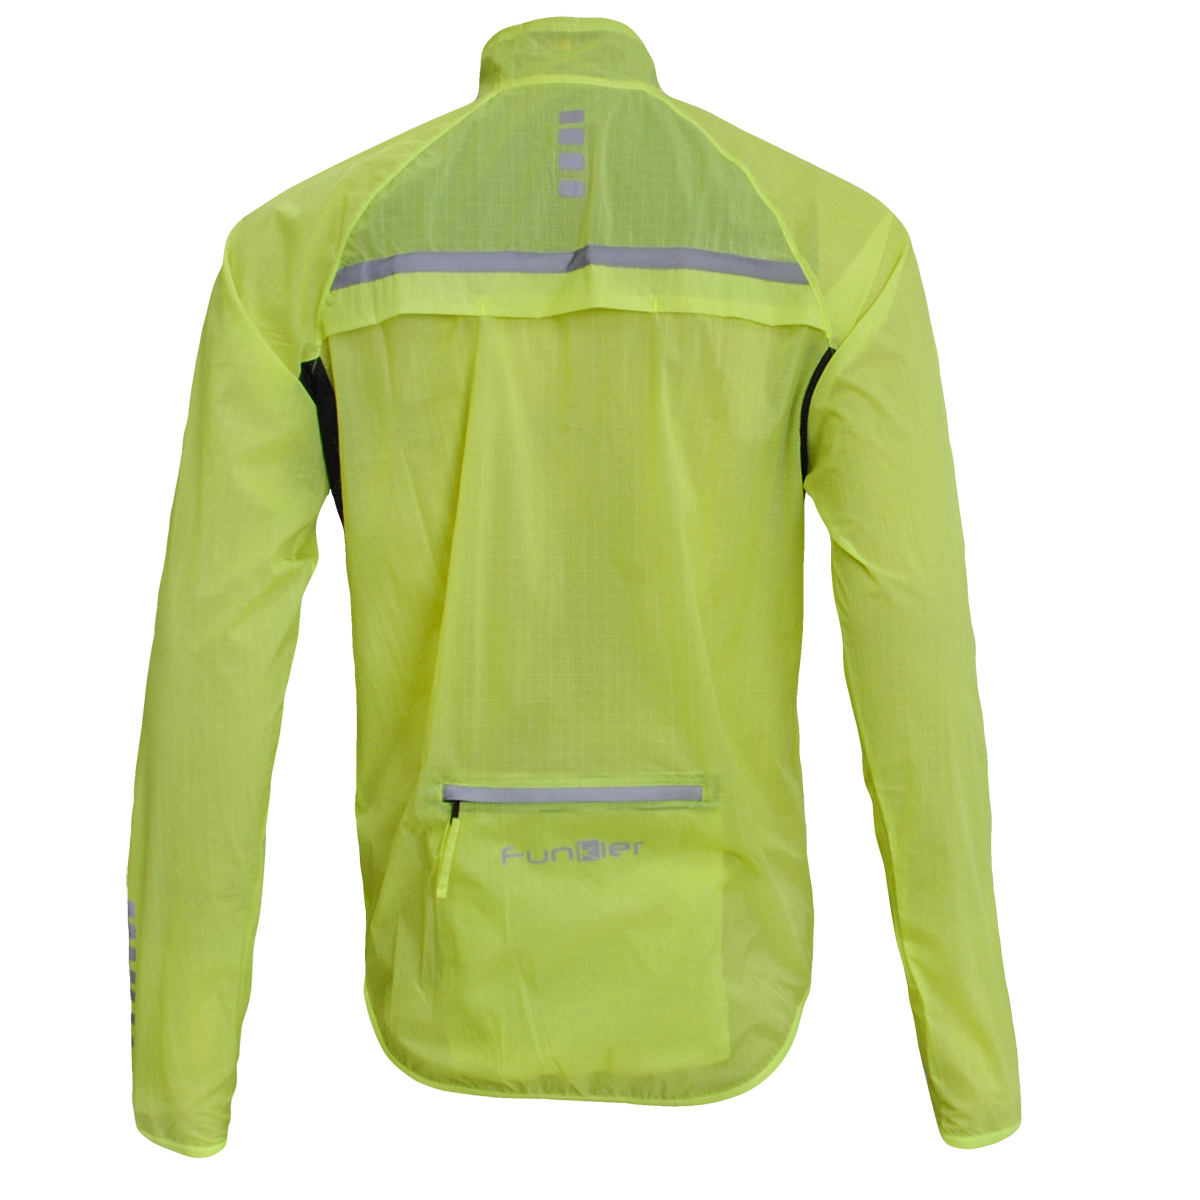 Funkier DryRide Pro Showerproof Cycling Jacket | Merlin Cycles